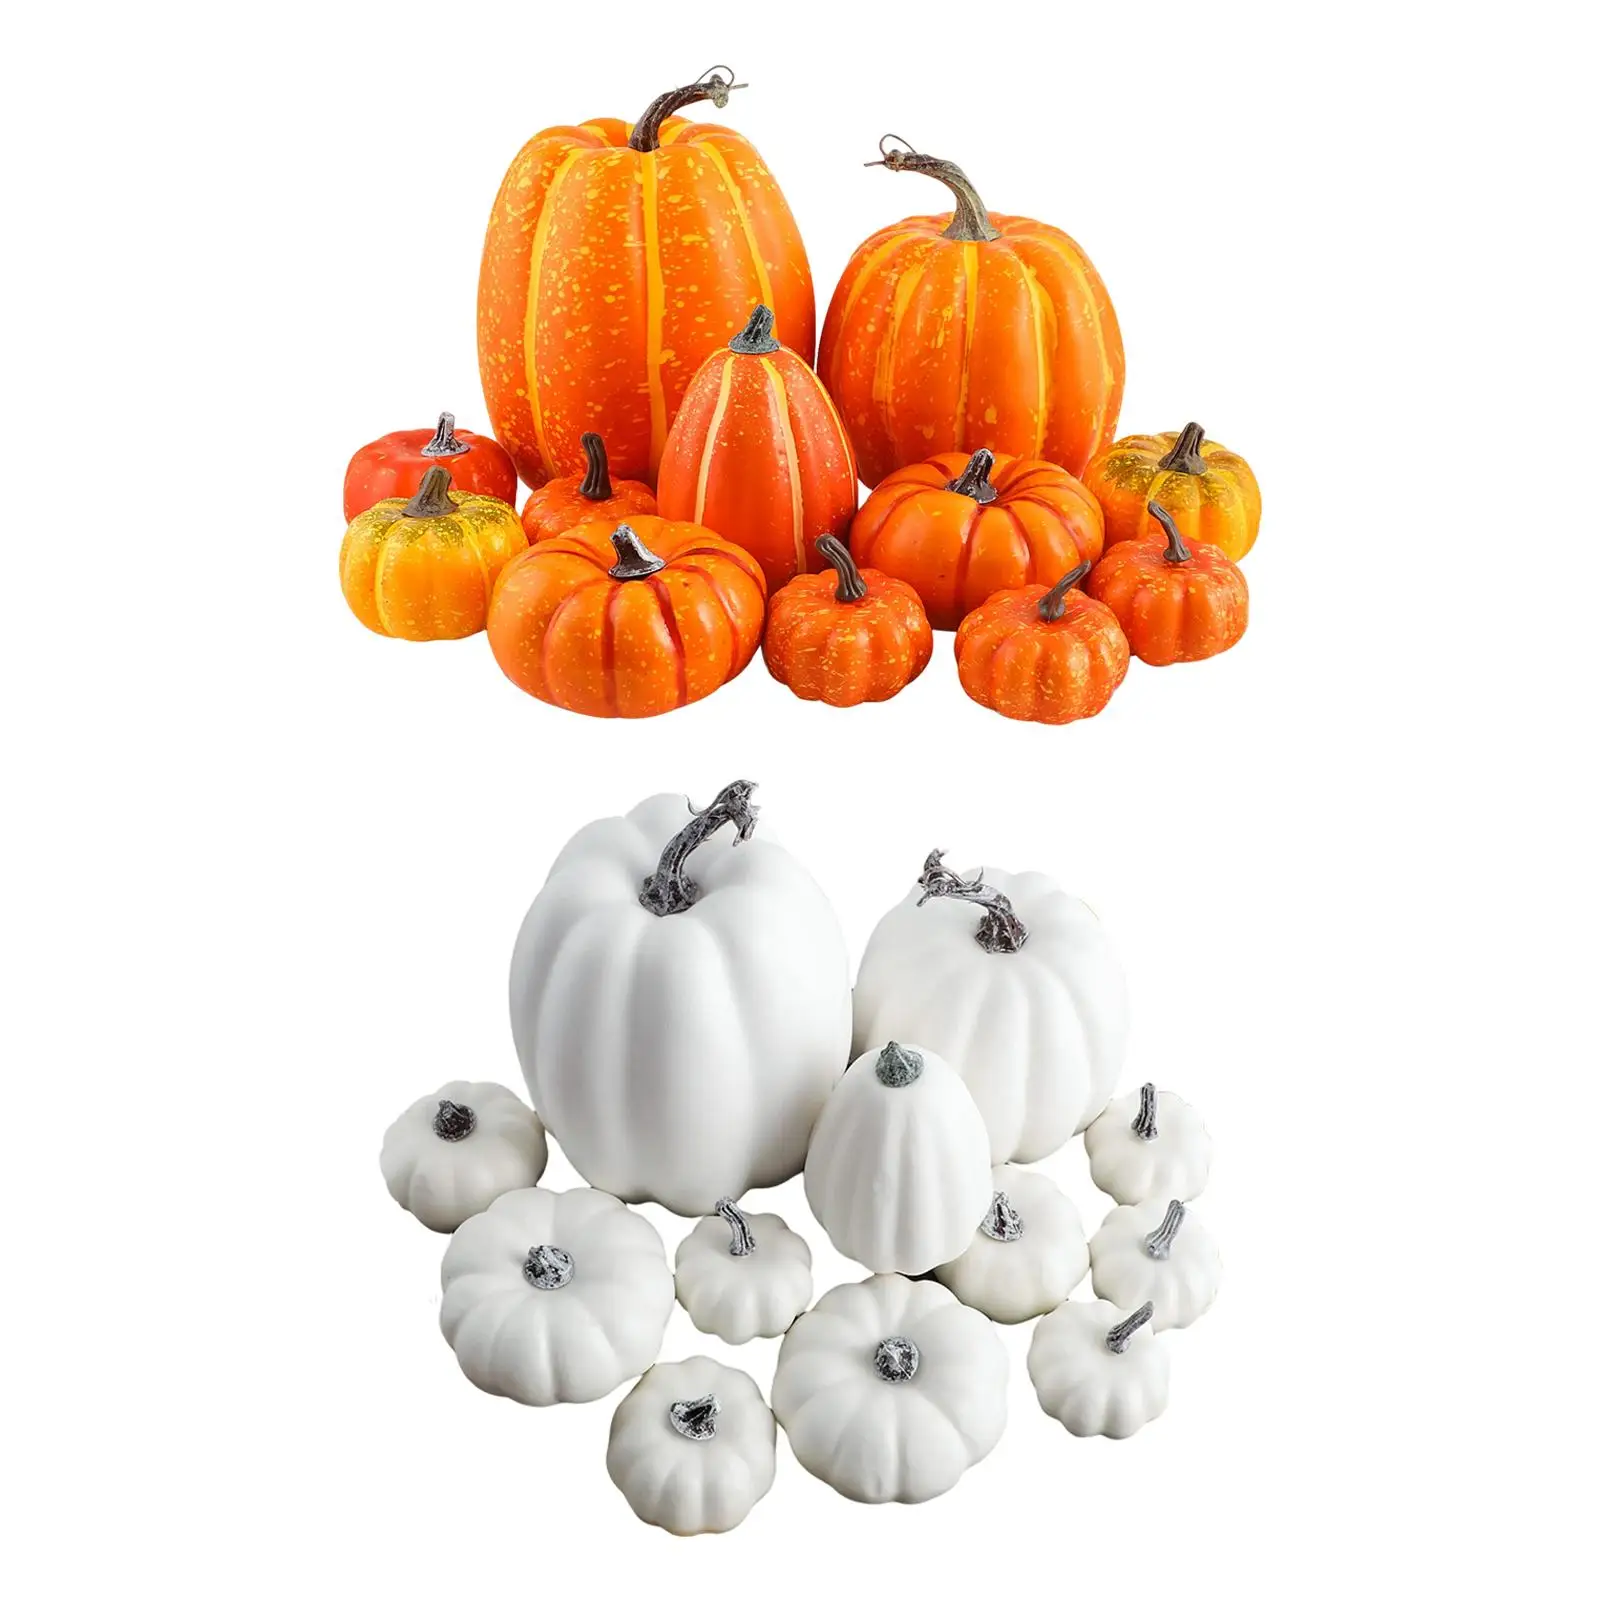 

12x Vivid Artificial Pumpkins Fall Party Autumn Harvest Props Thanksgiving